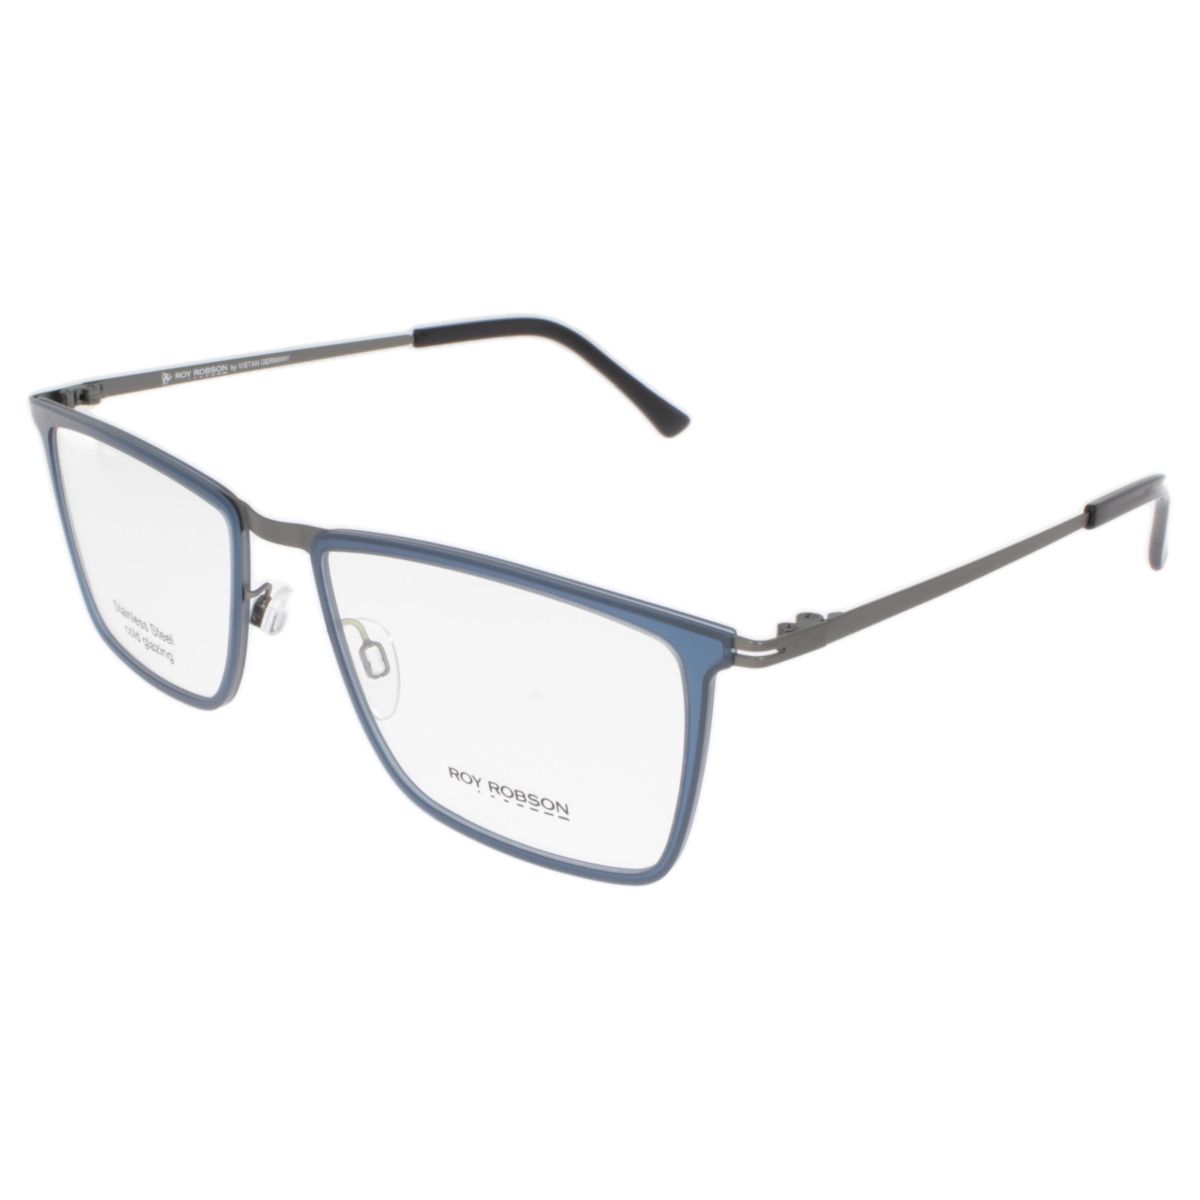 Roy Robson Frames | AvramisOptics Contact Lenses, Sunglasses and Eyeglasses